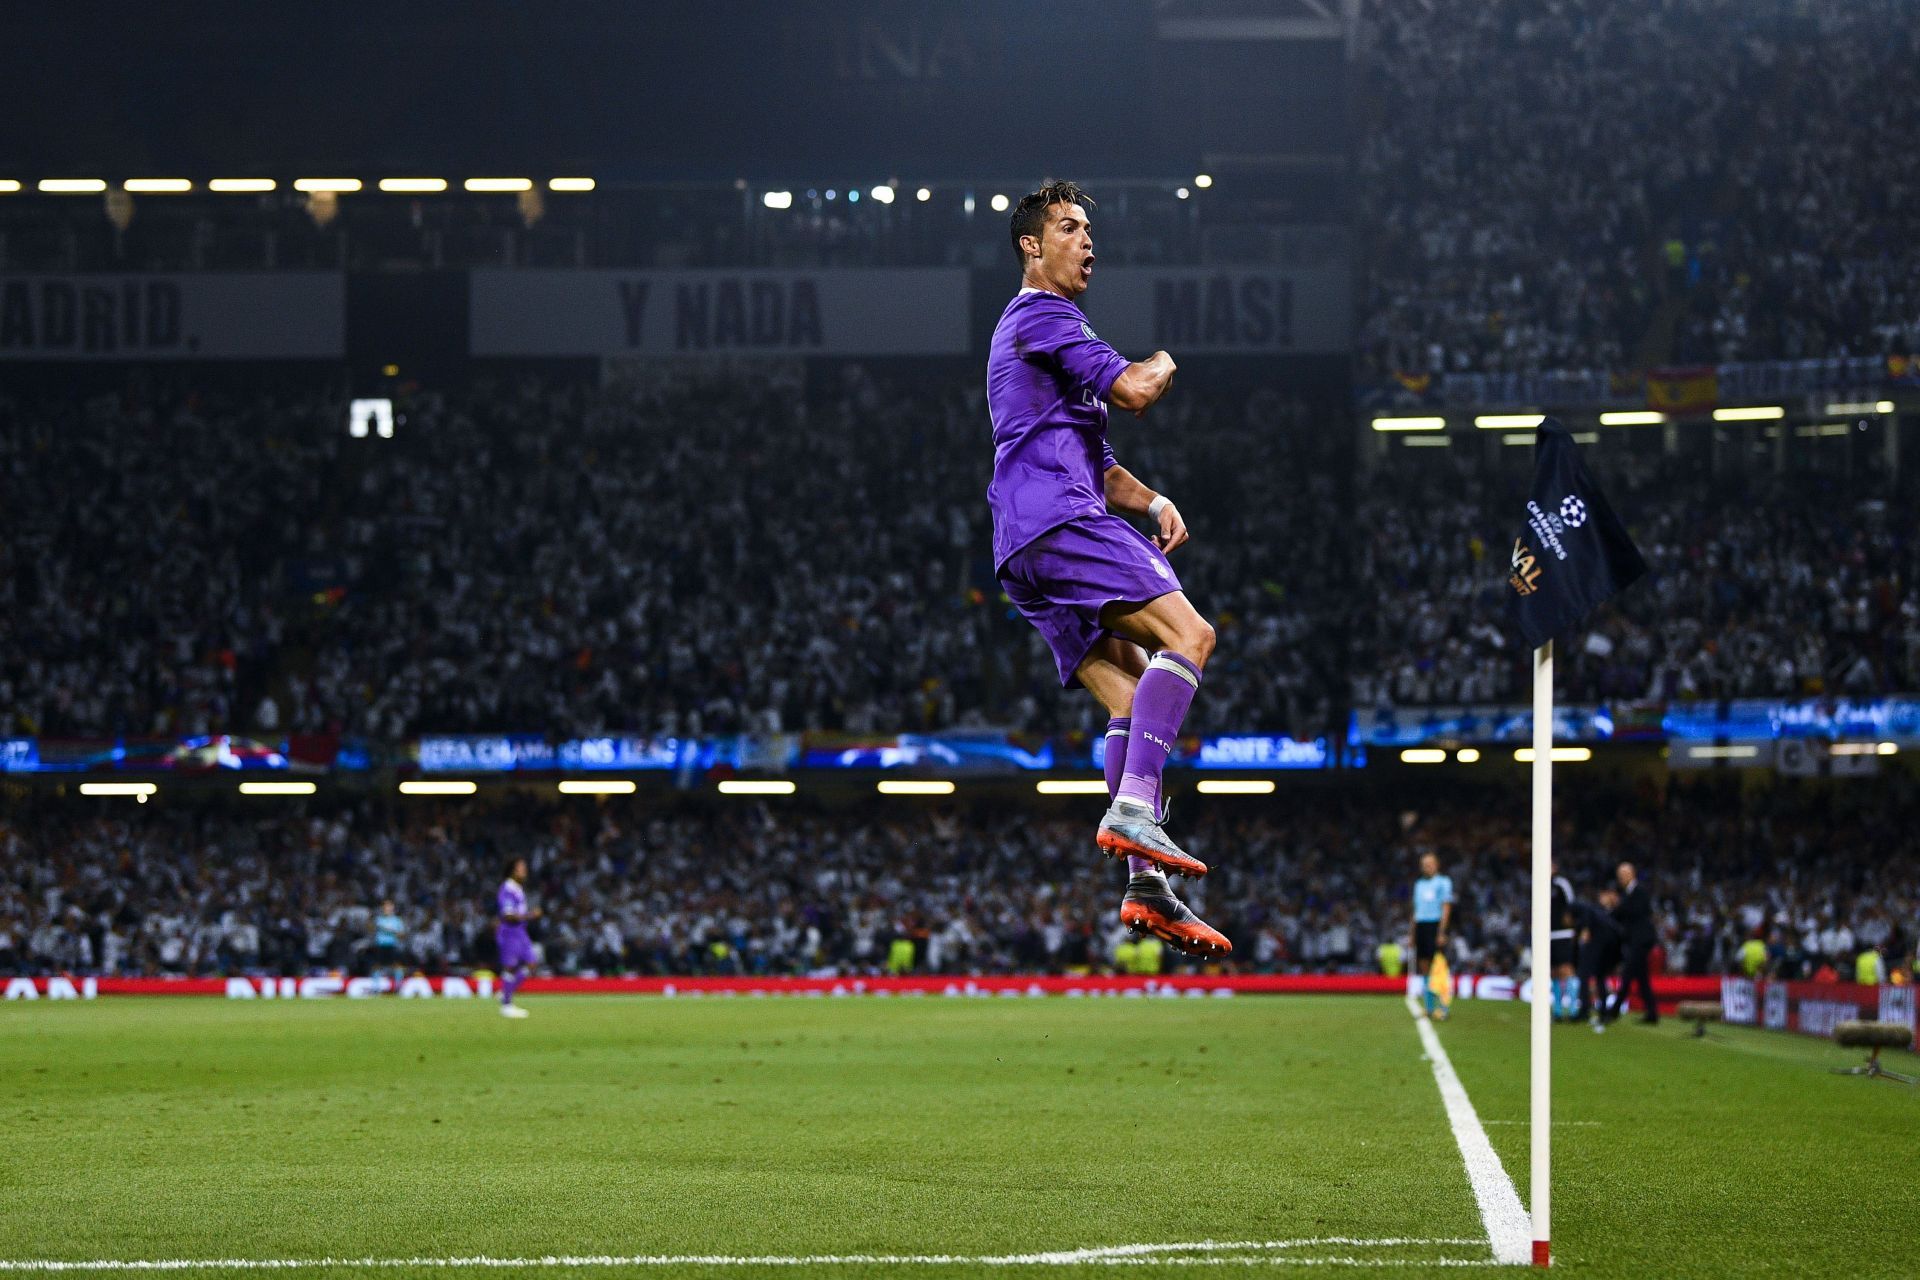 Cristiano Ronaldo has had many great performances in the Champions League